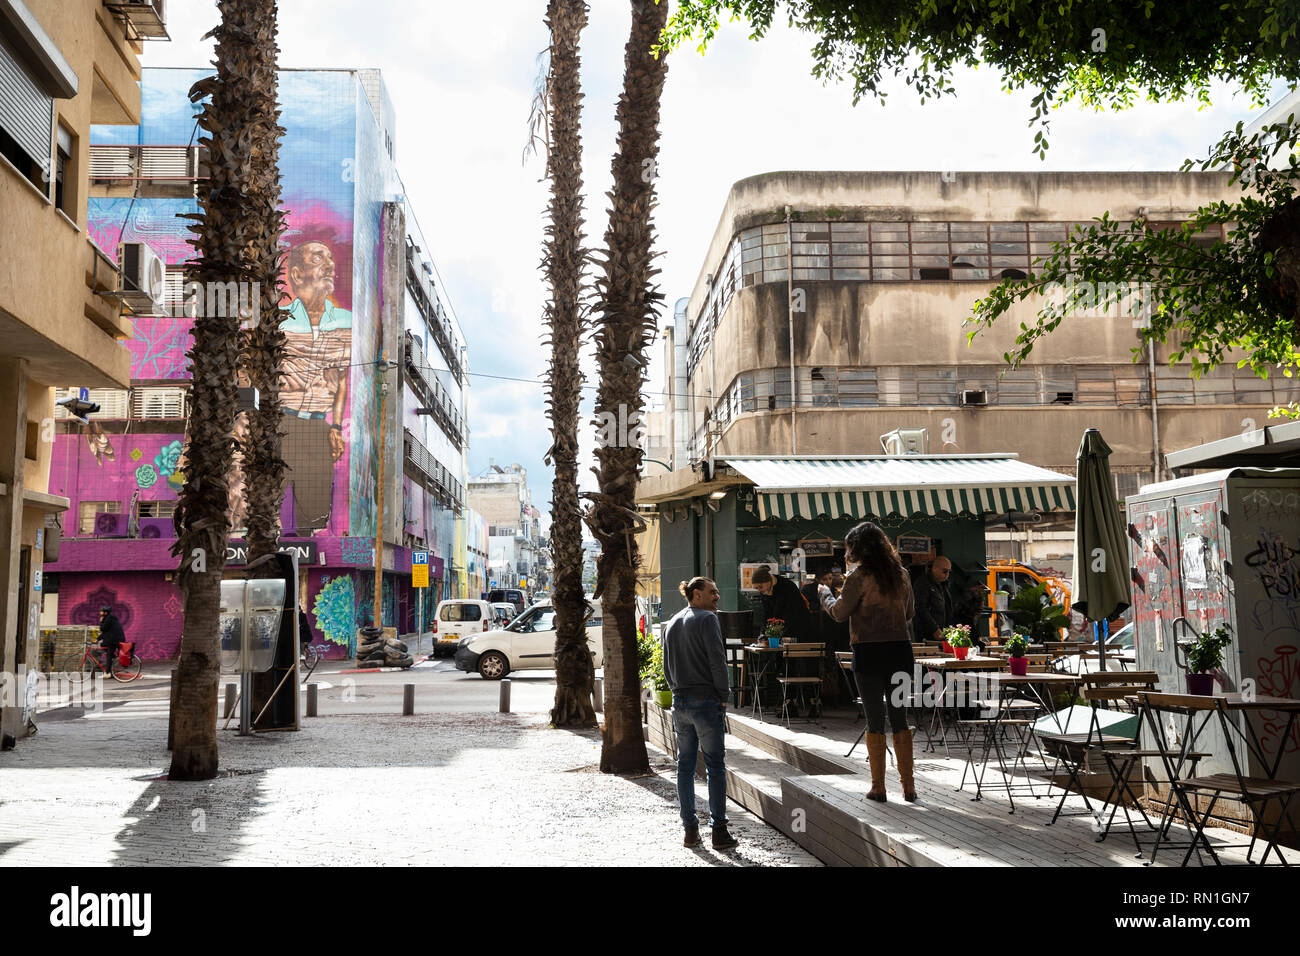 Tel Aviv-Yafo, Tel Aviv, Florentin, Israel - December 28, 2018: Lifestyle street scene - people at caffe shop, old buildings and beautiful mural art Stock Photo